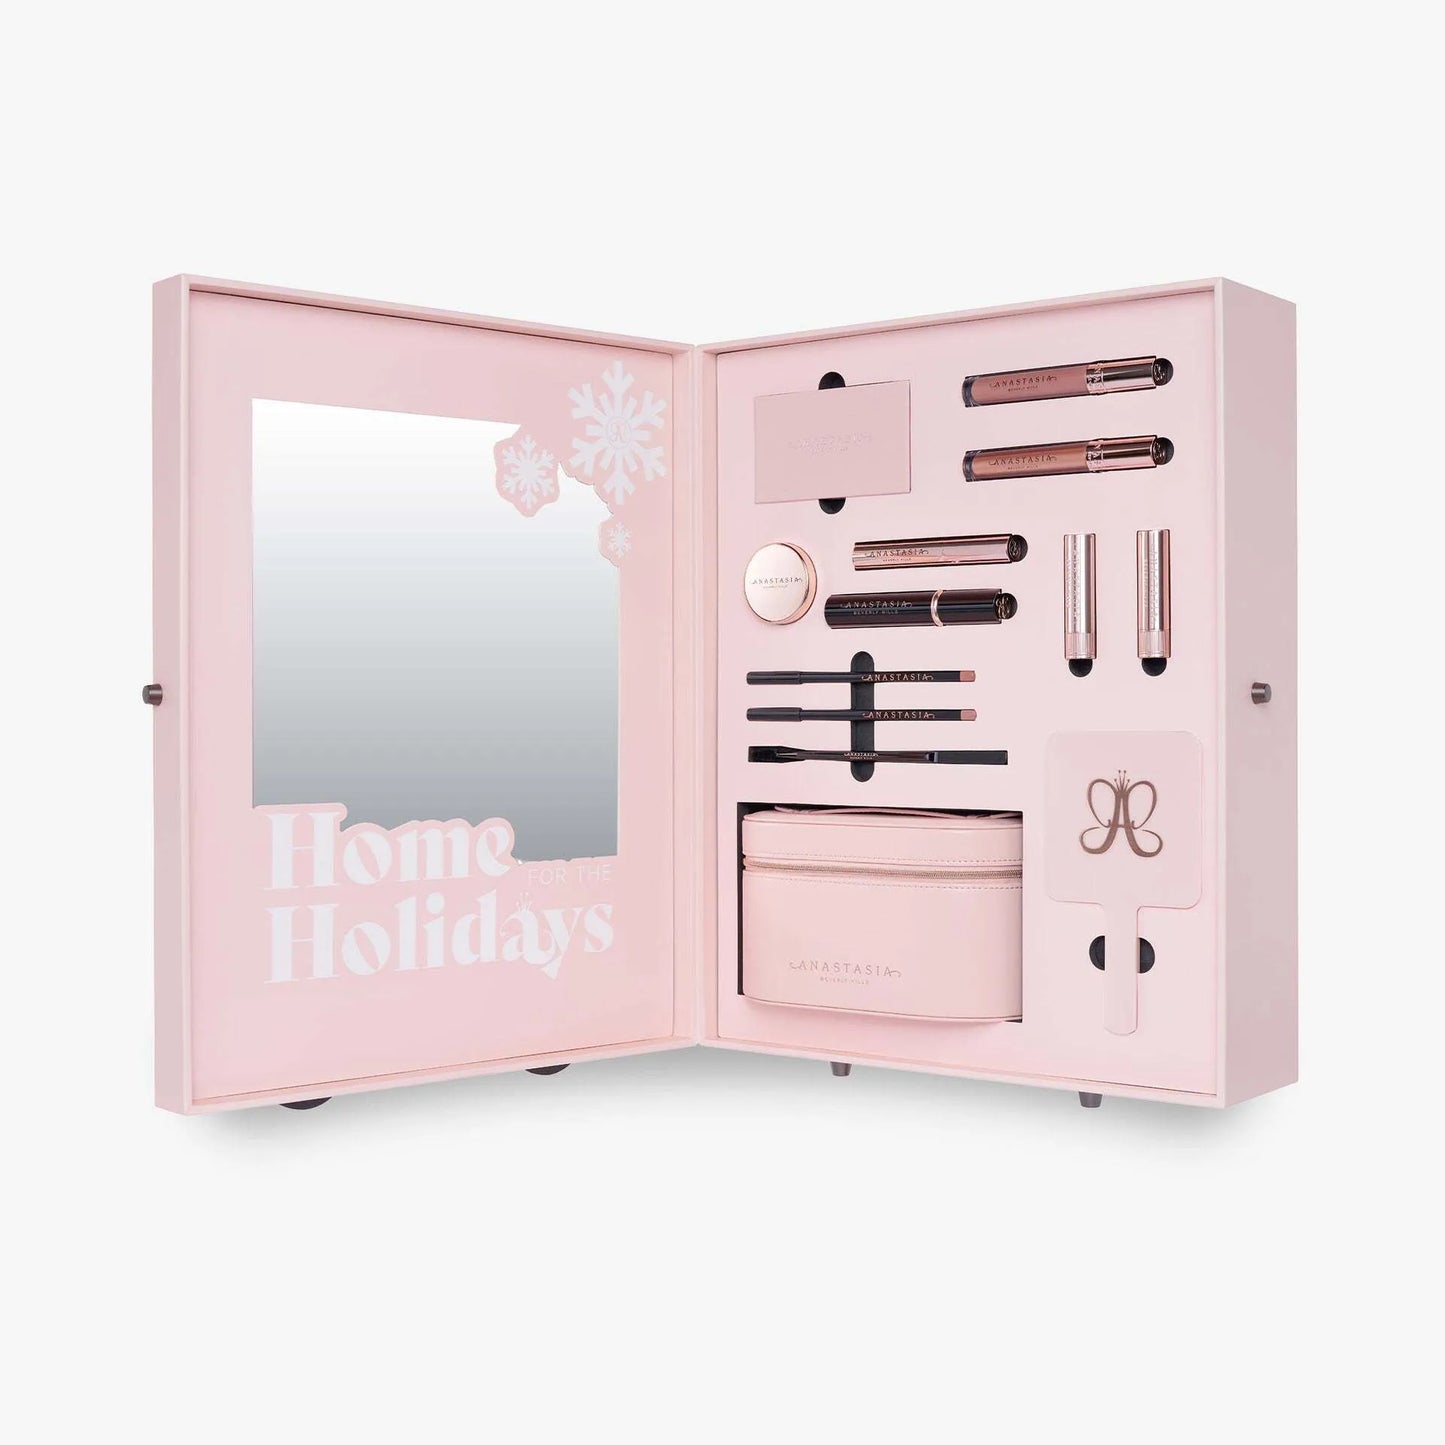 Anastasia Beverly Hills Homne for the Holidays Vault Set (Limited Edition)